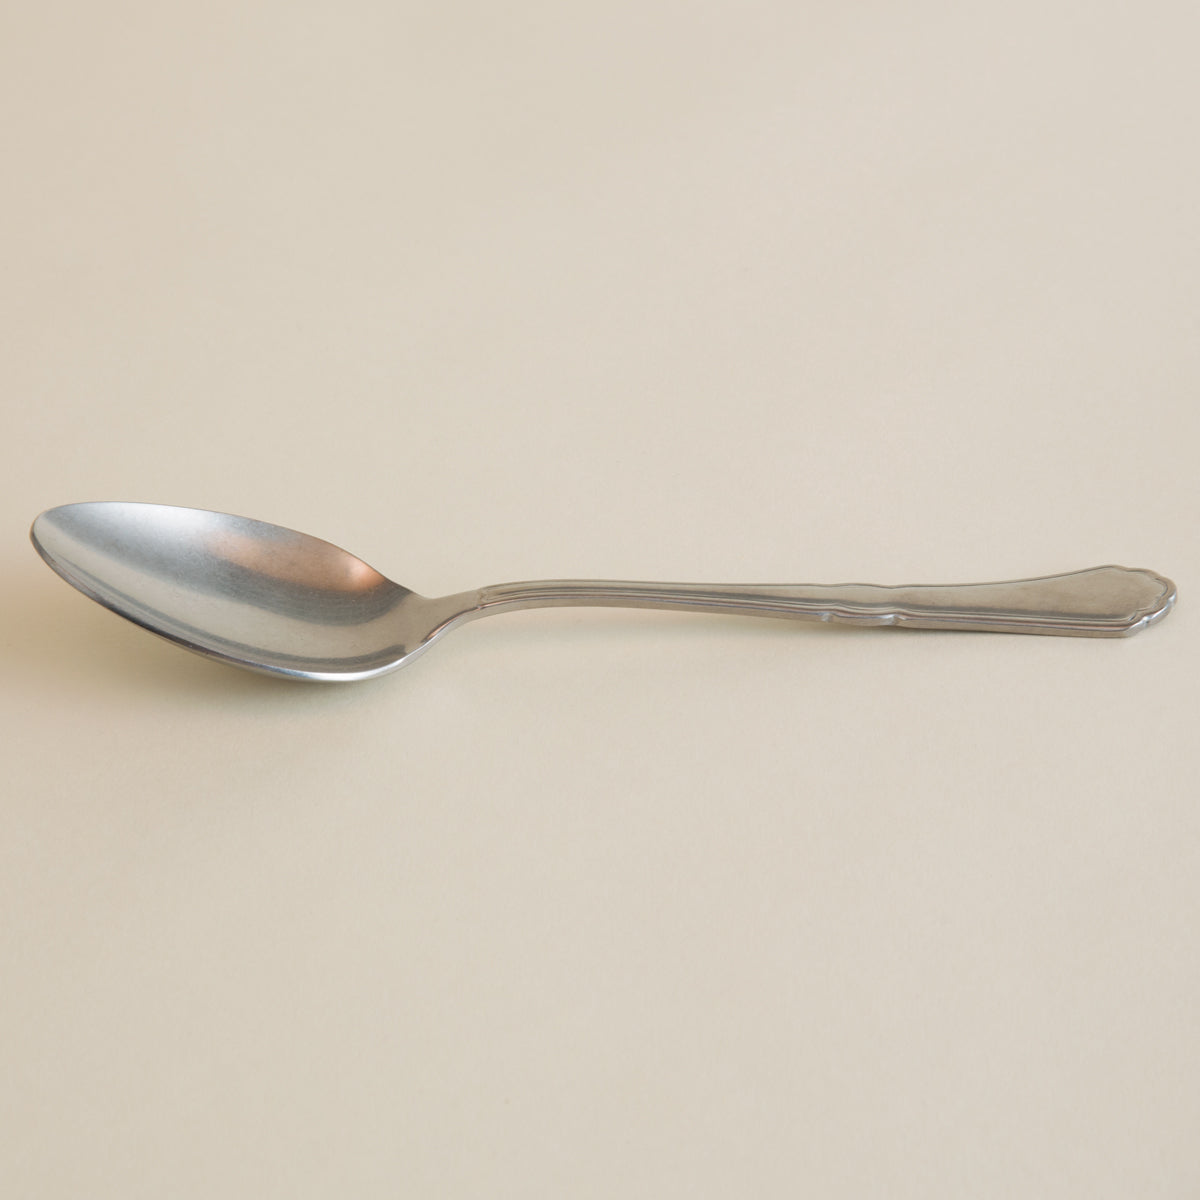 Stonewashed Serving Spoon